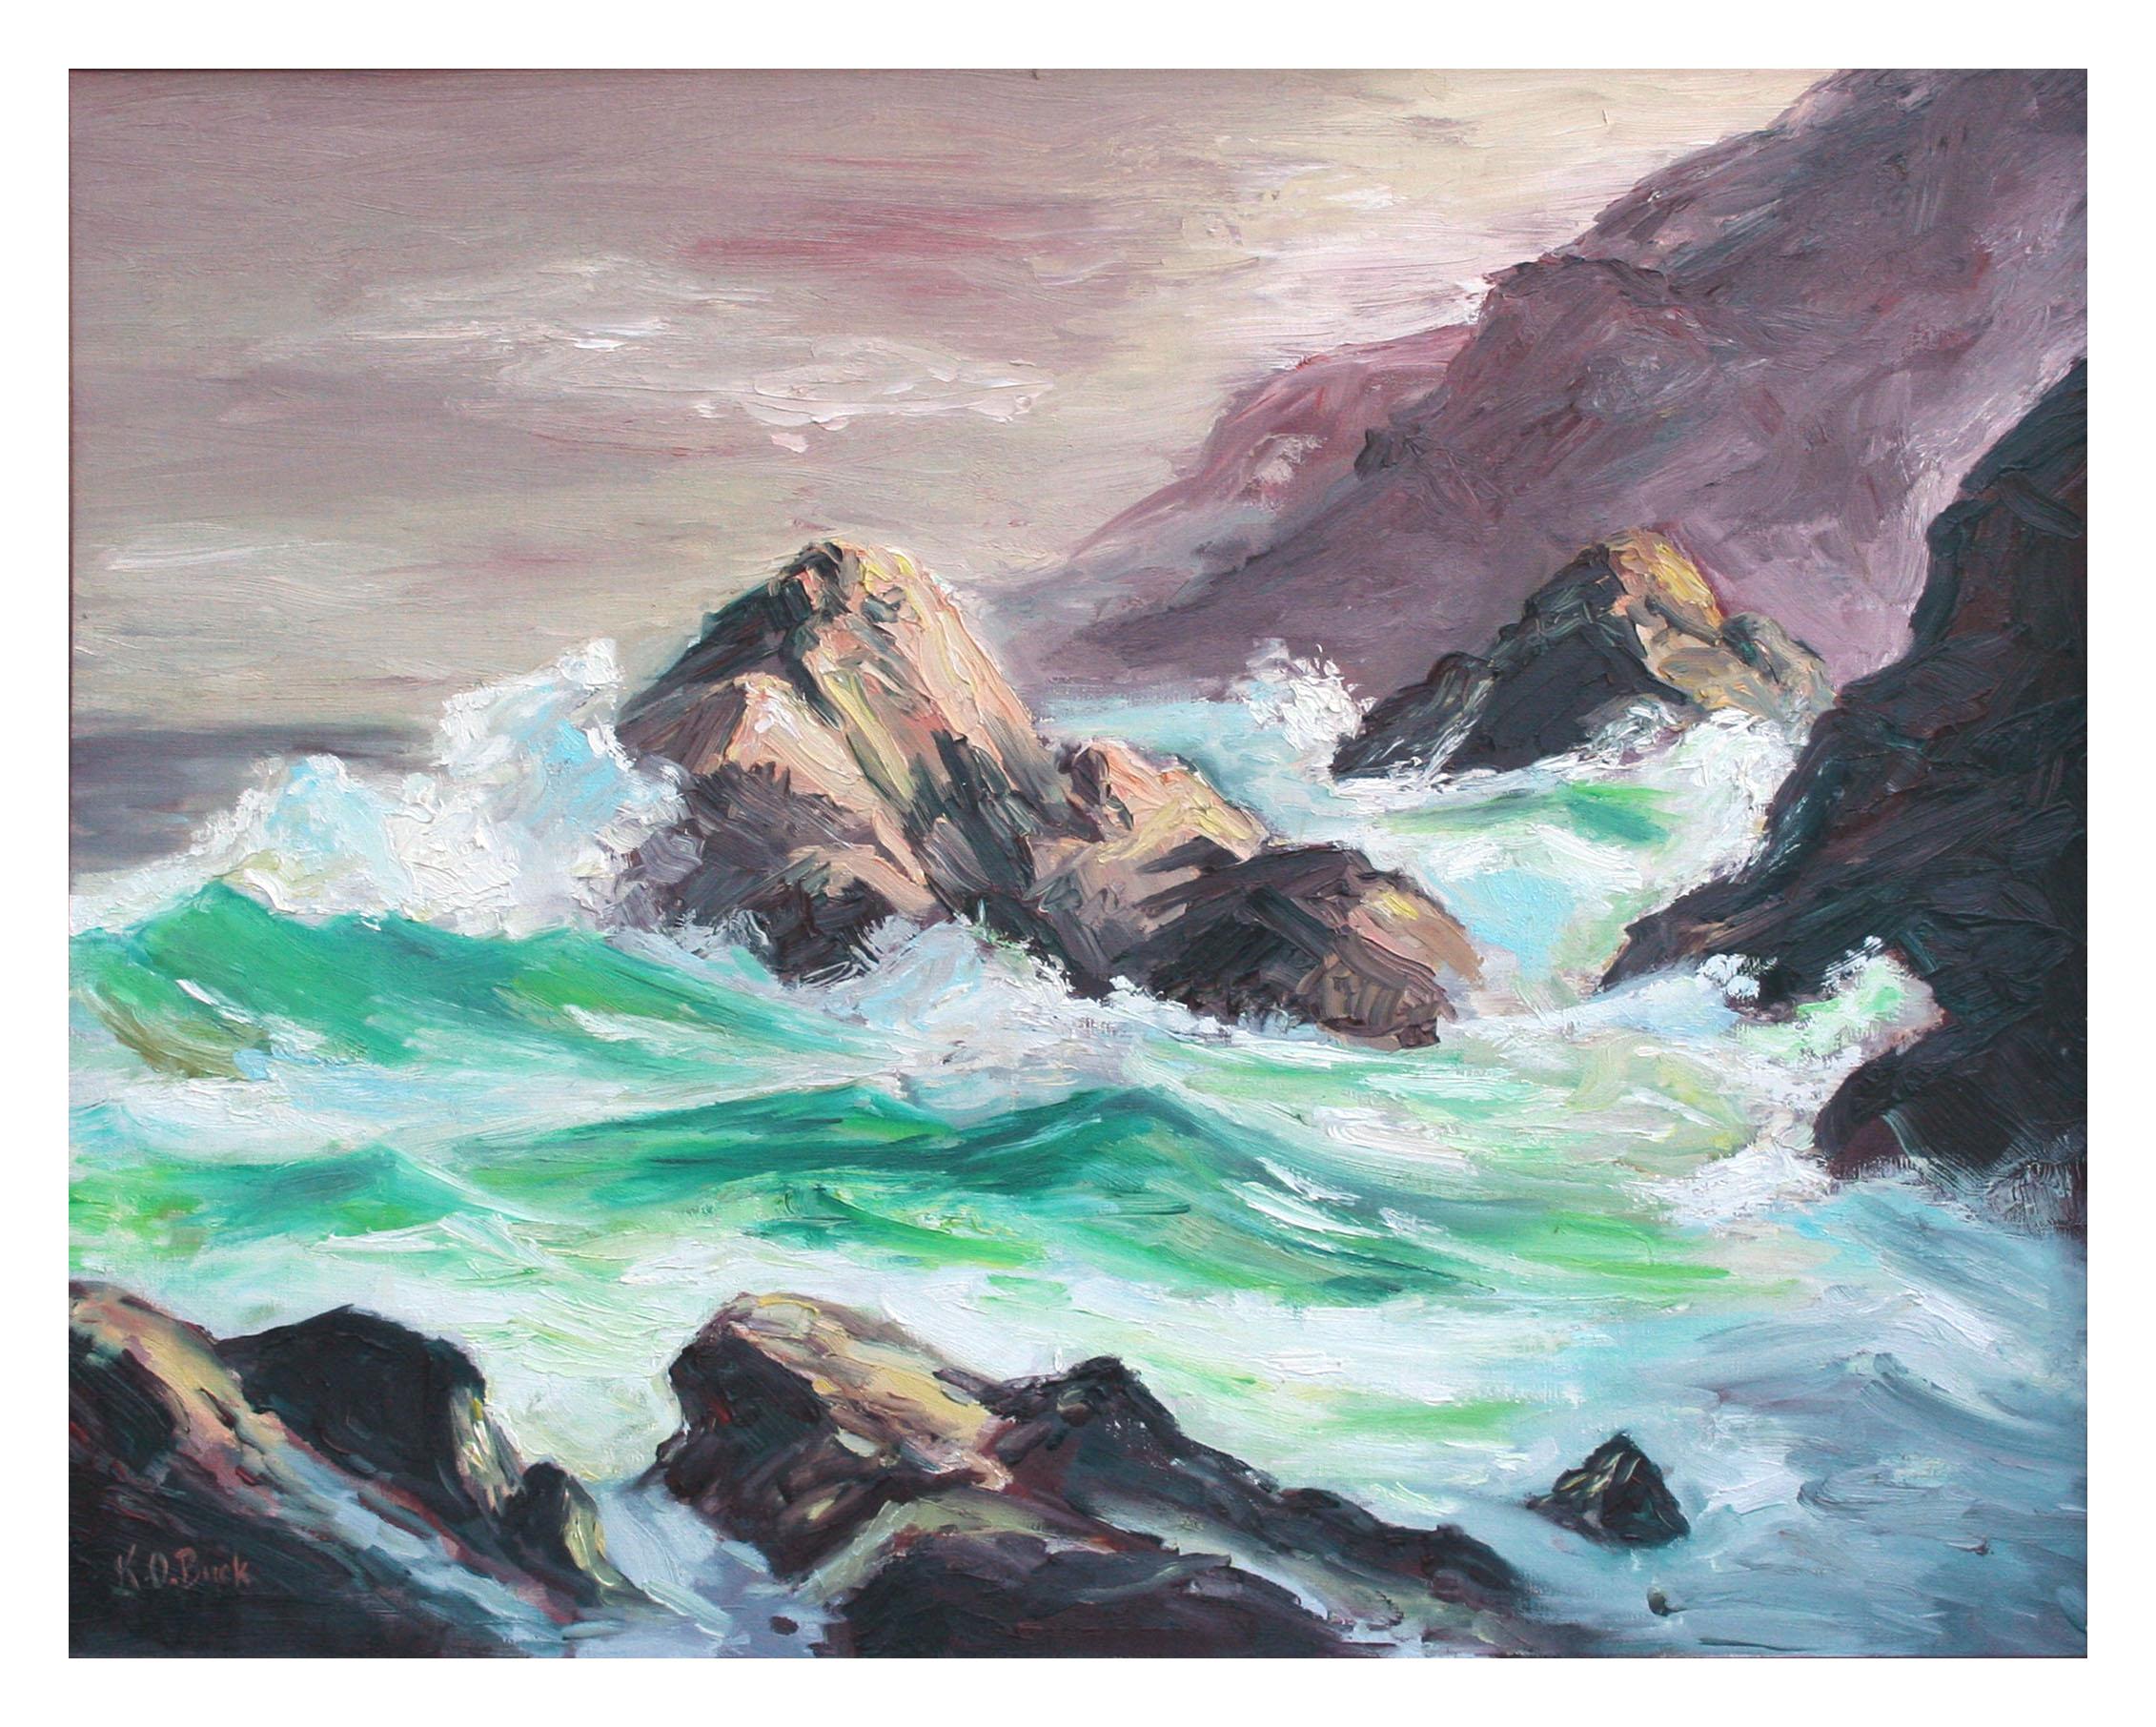 California Coastal Waves Seascape Original Öl auf Leinwand – Painting von K.O. Buck